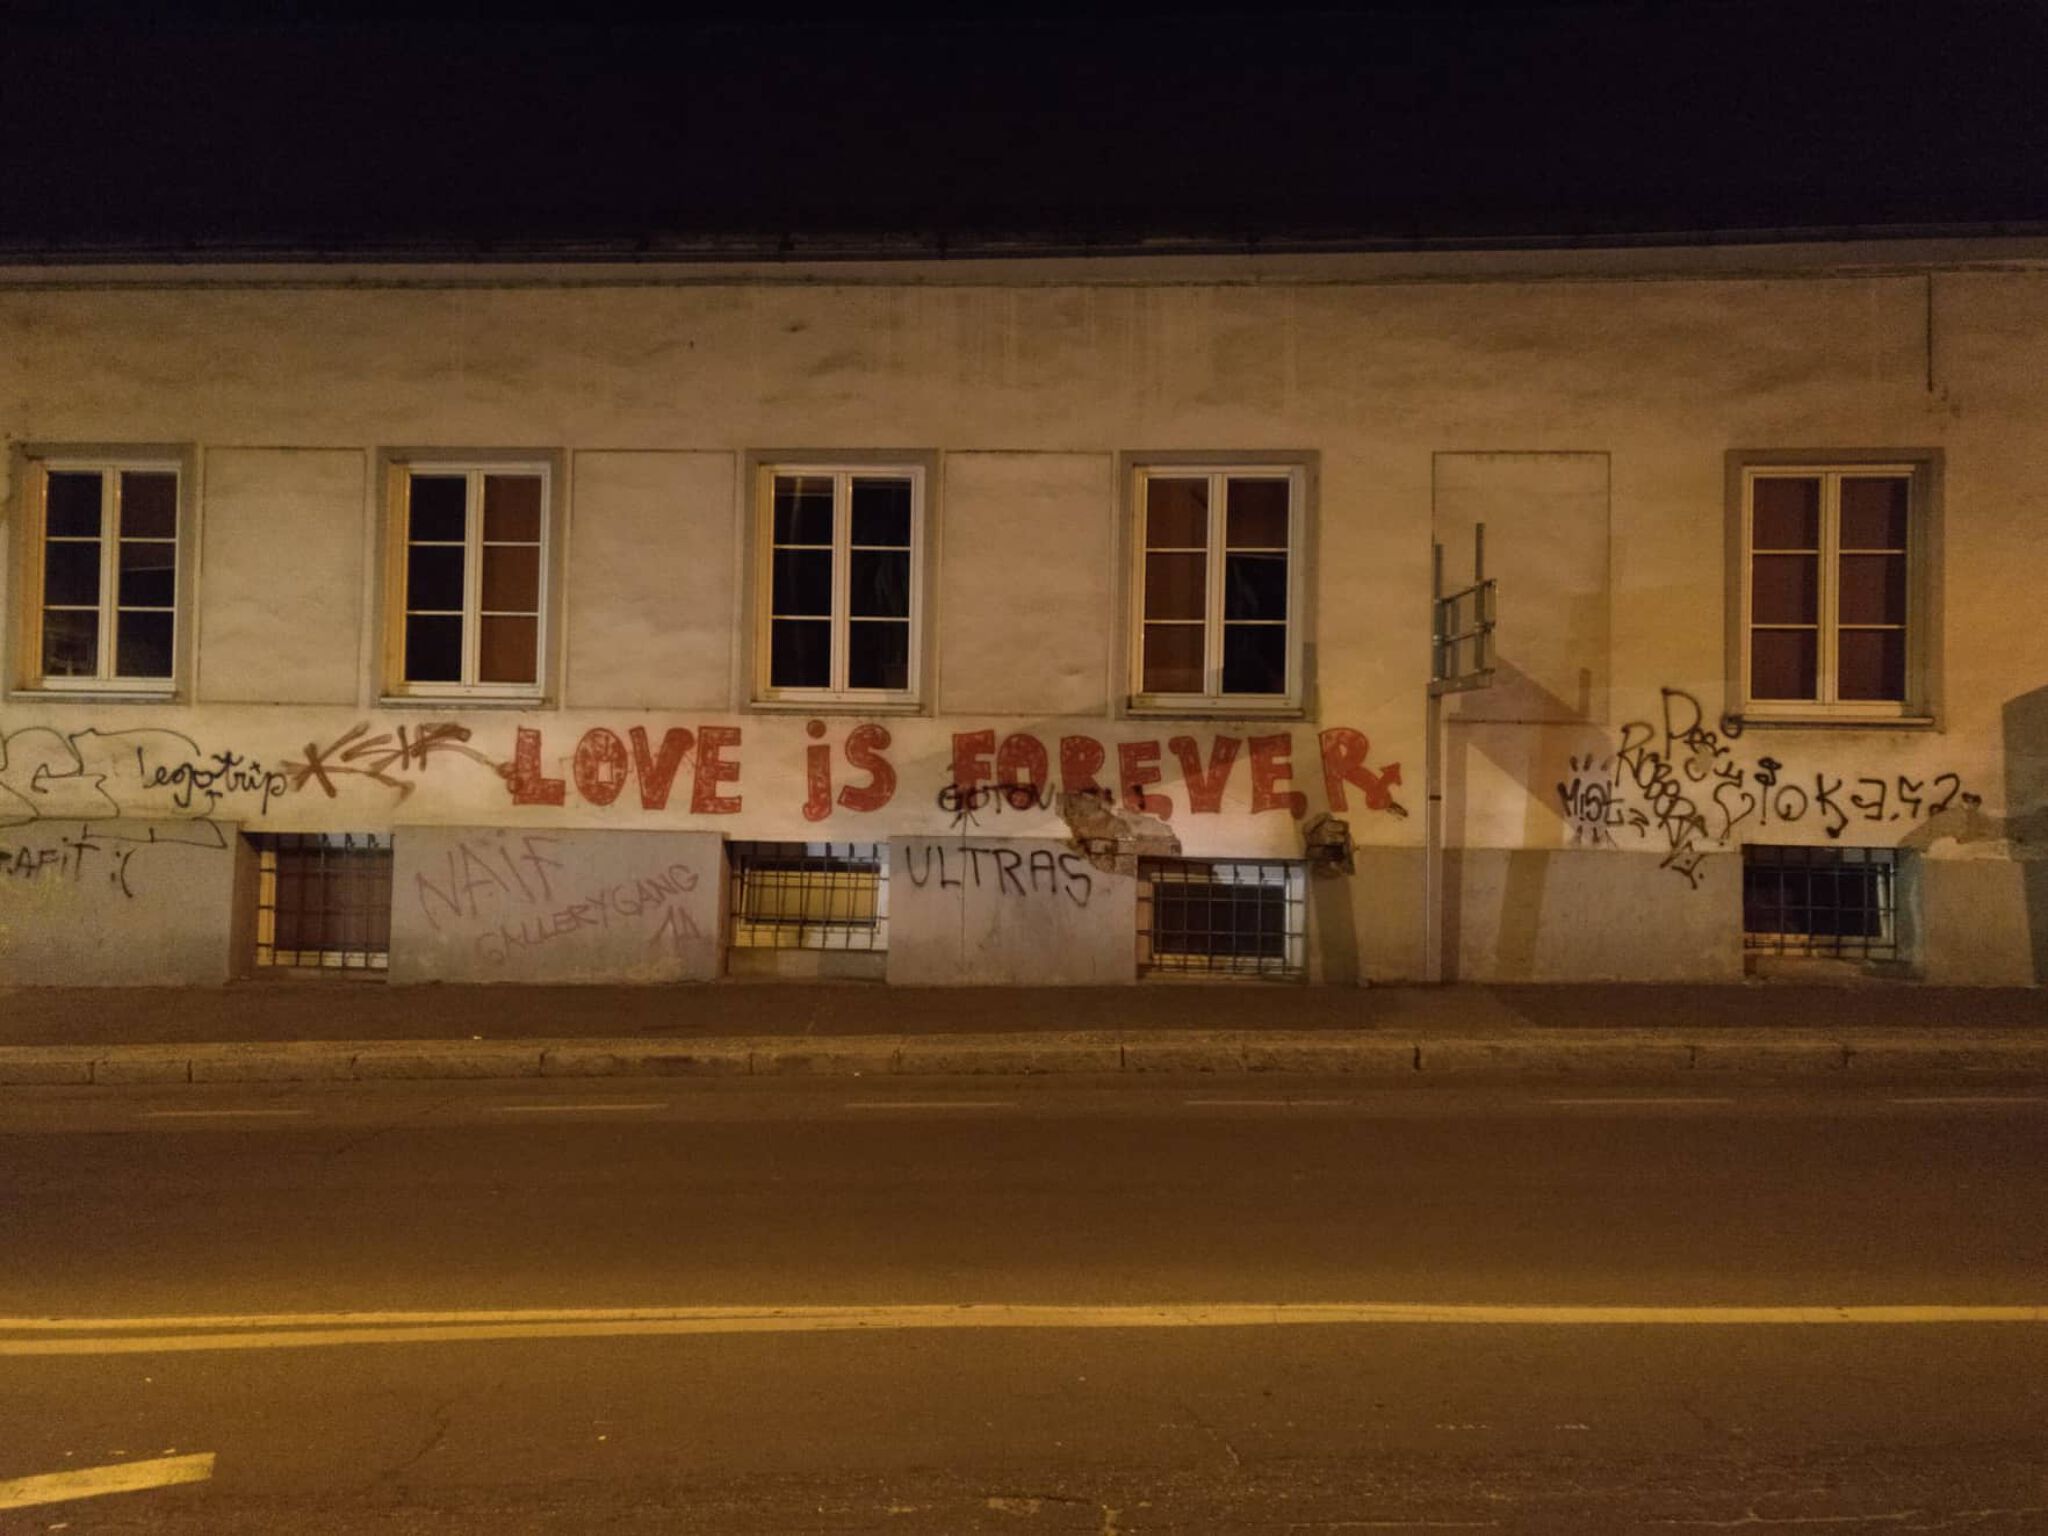 &mdash;LOVE IS FOREVER